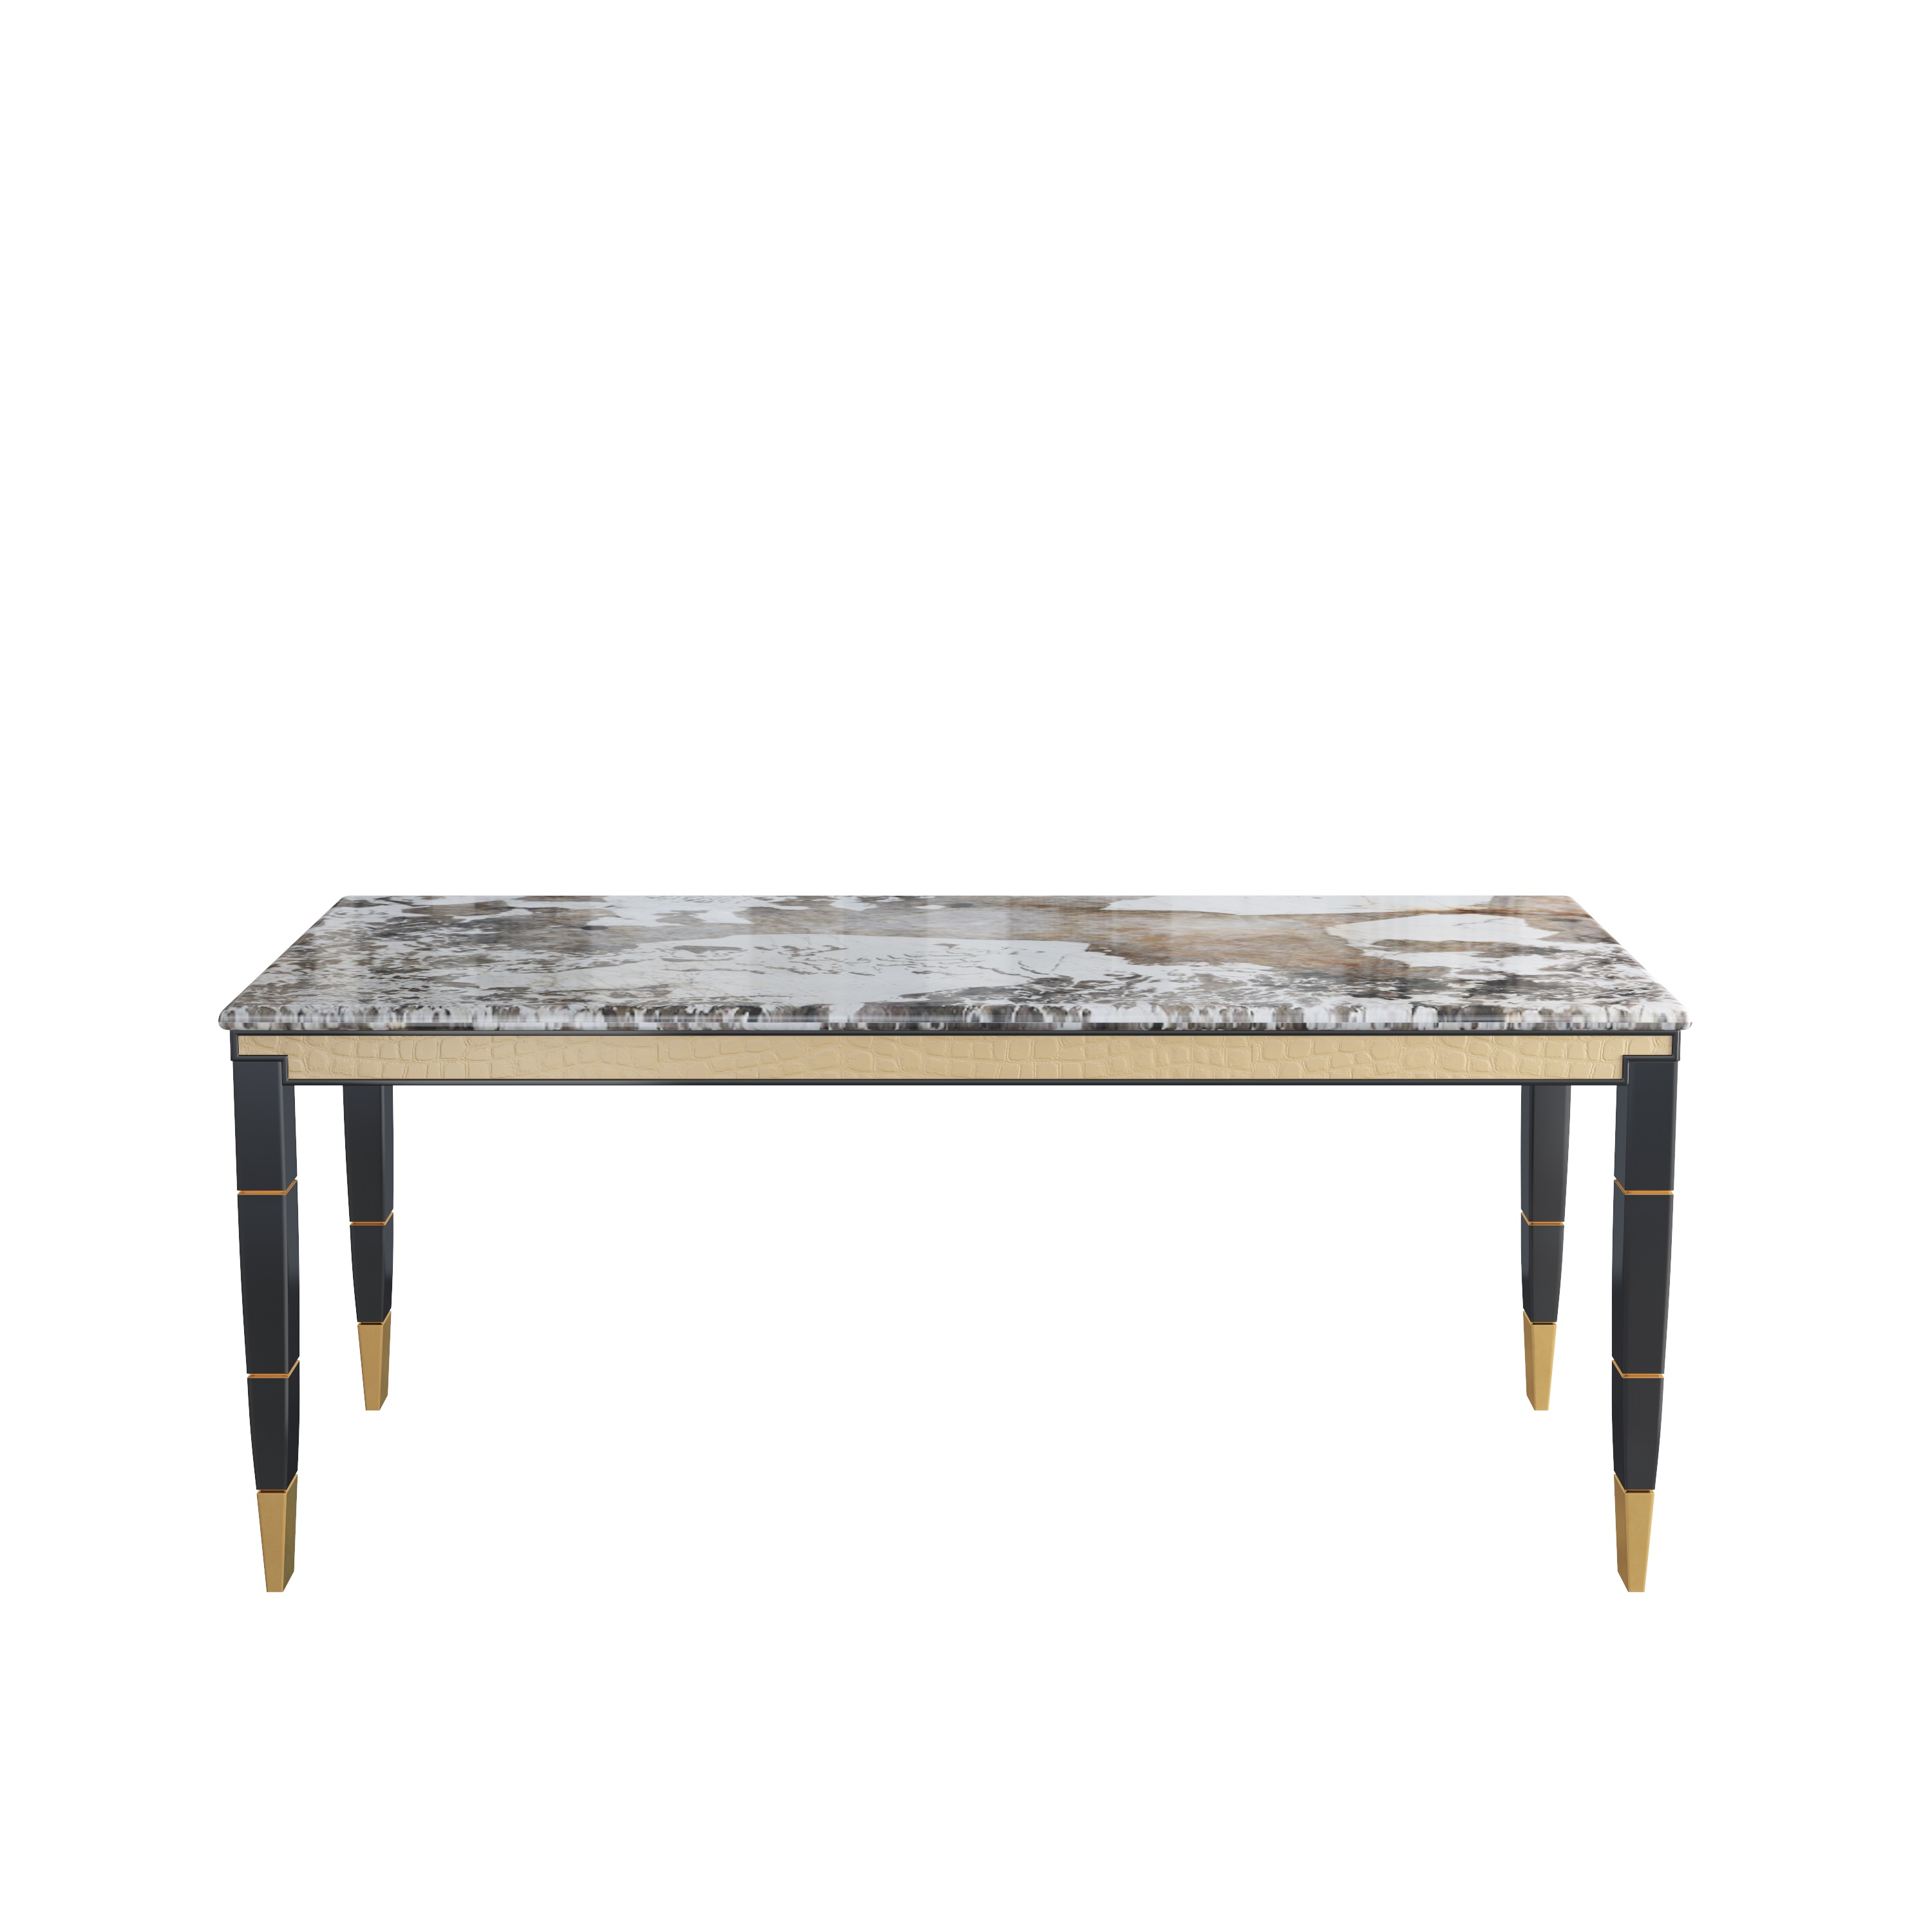 Brass & luxury stone rectangular dining table